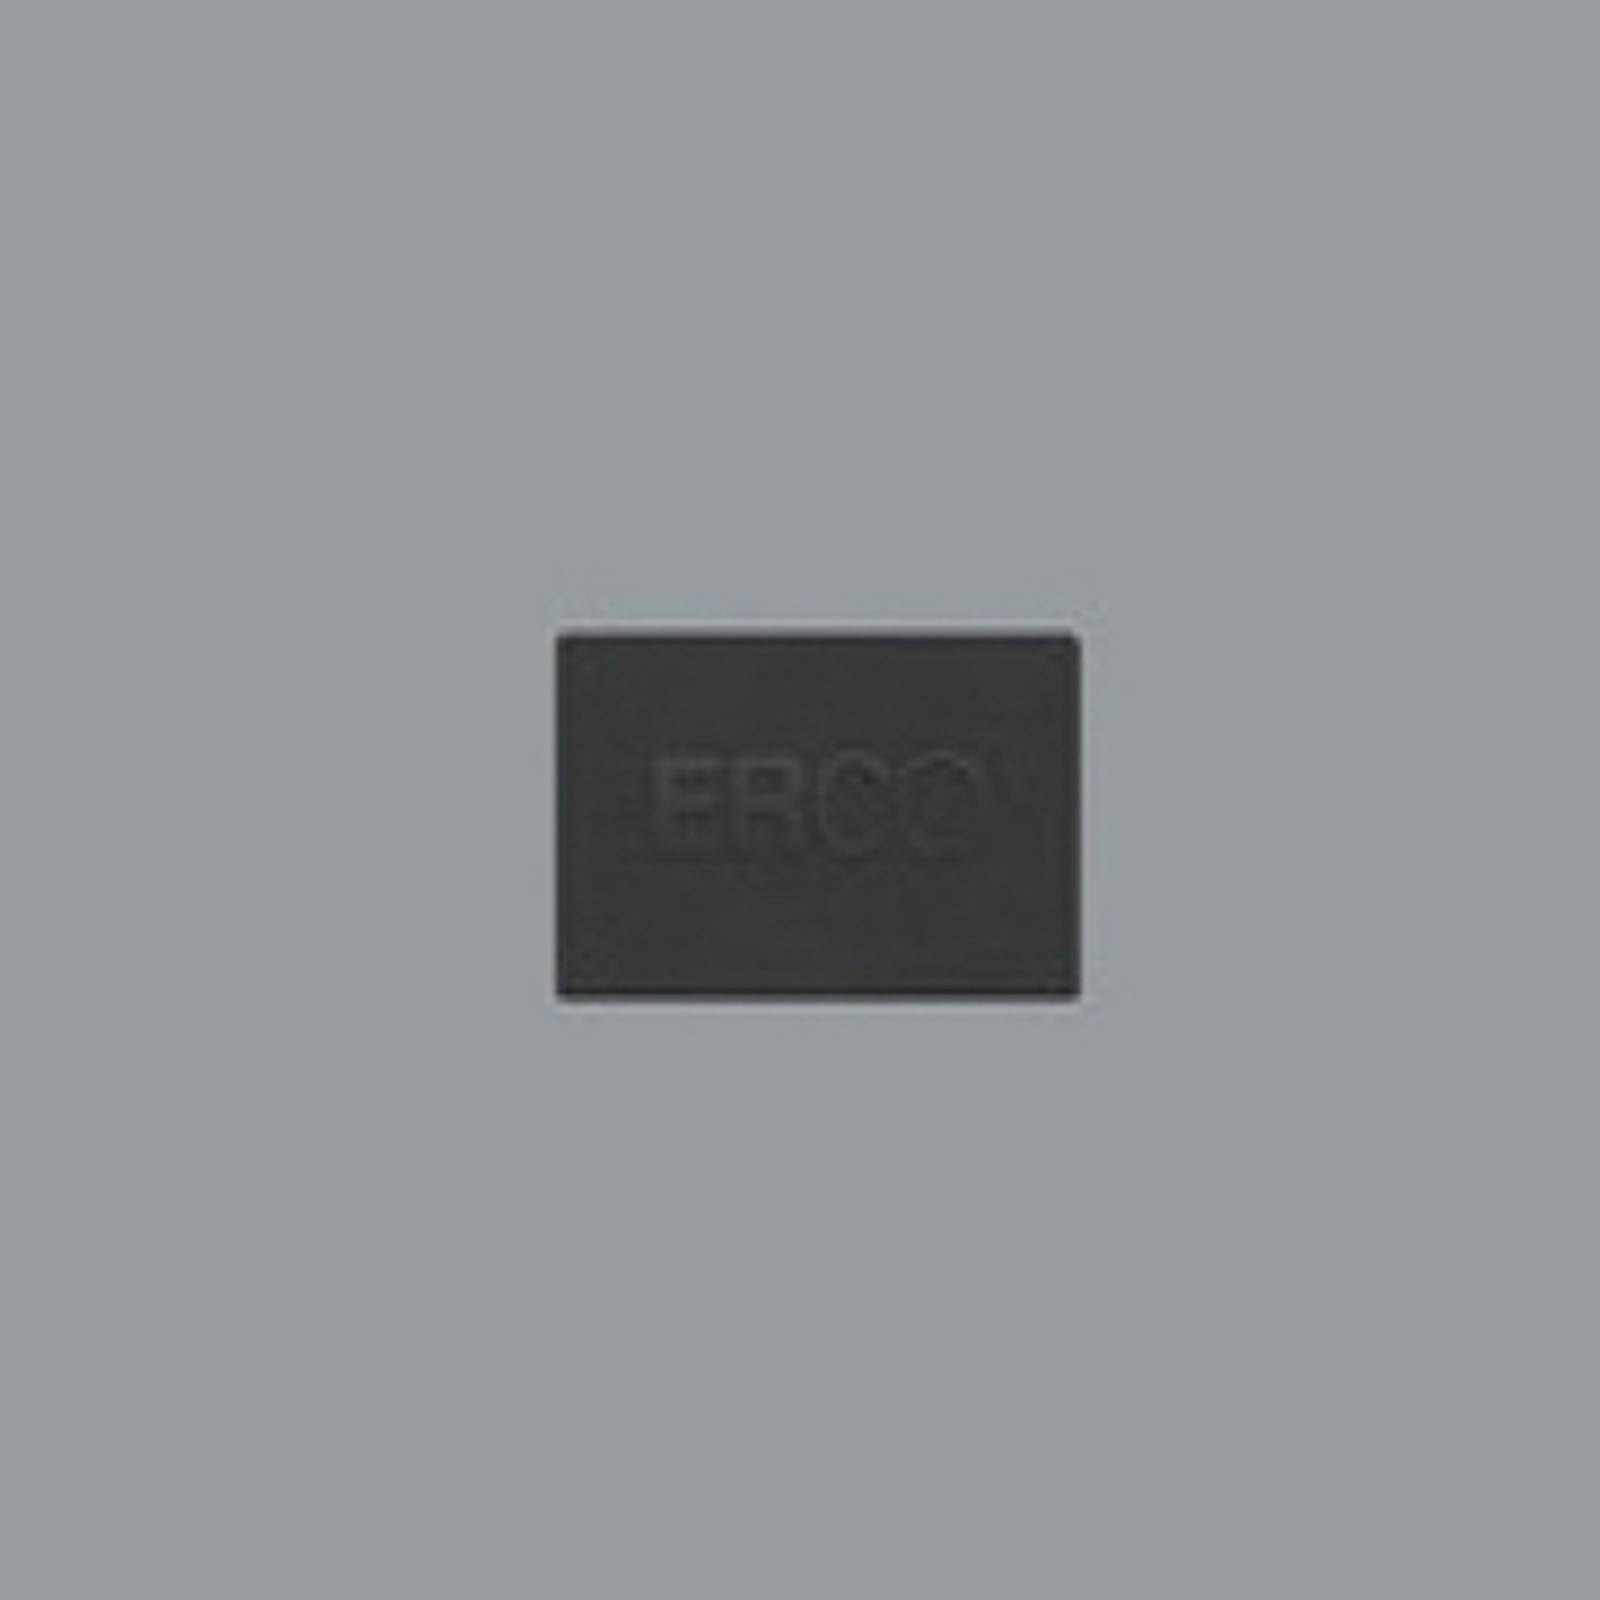 ERCO véglemez a Minirail sínhez, fekete színű